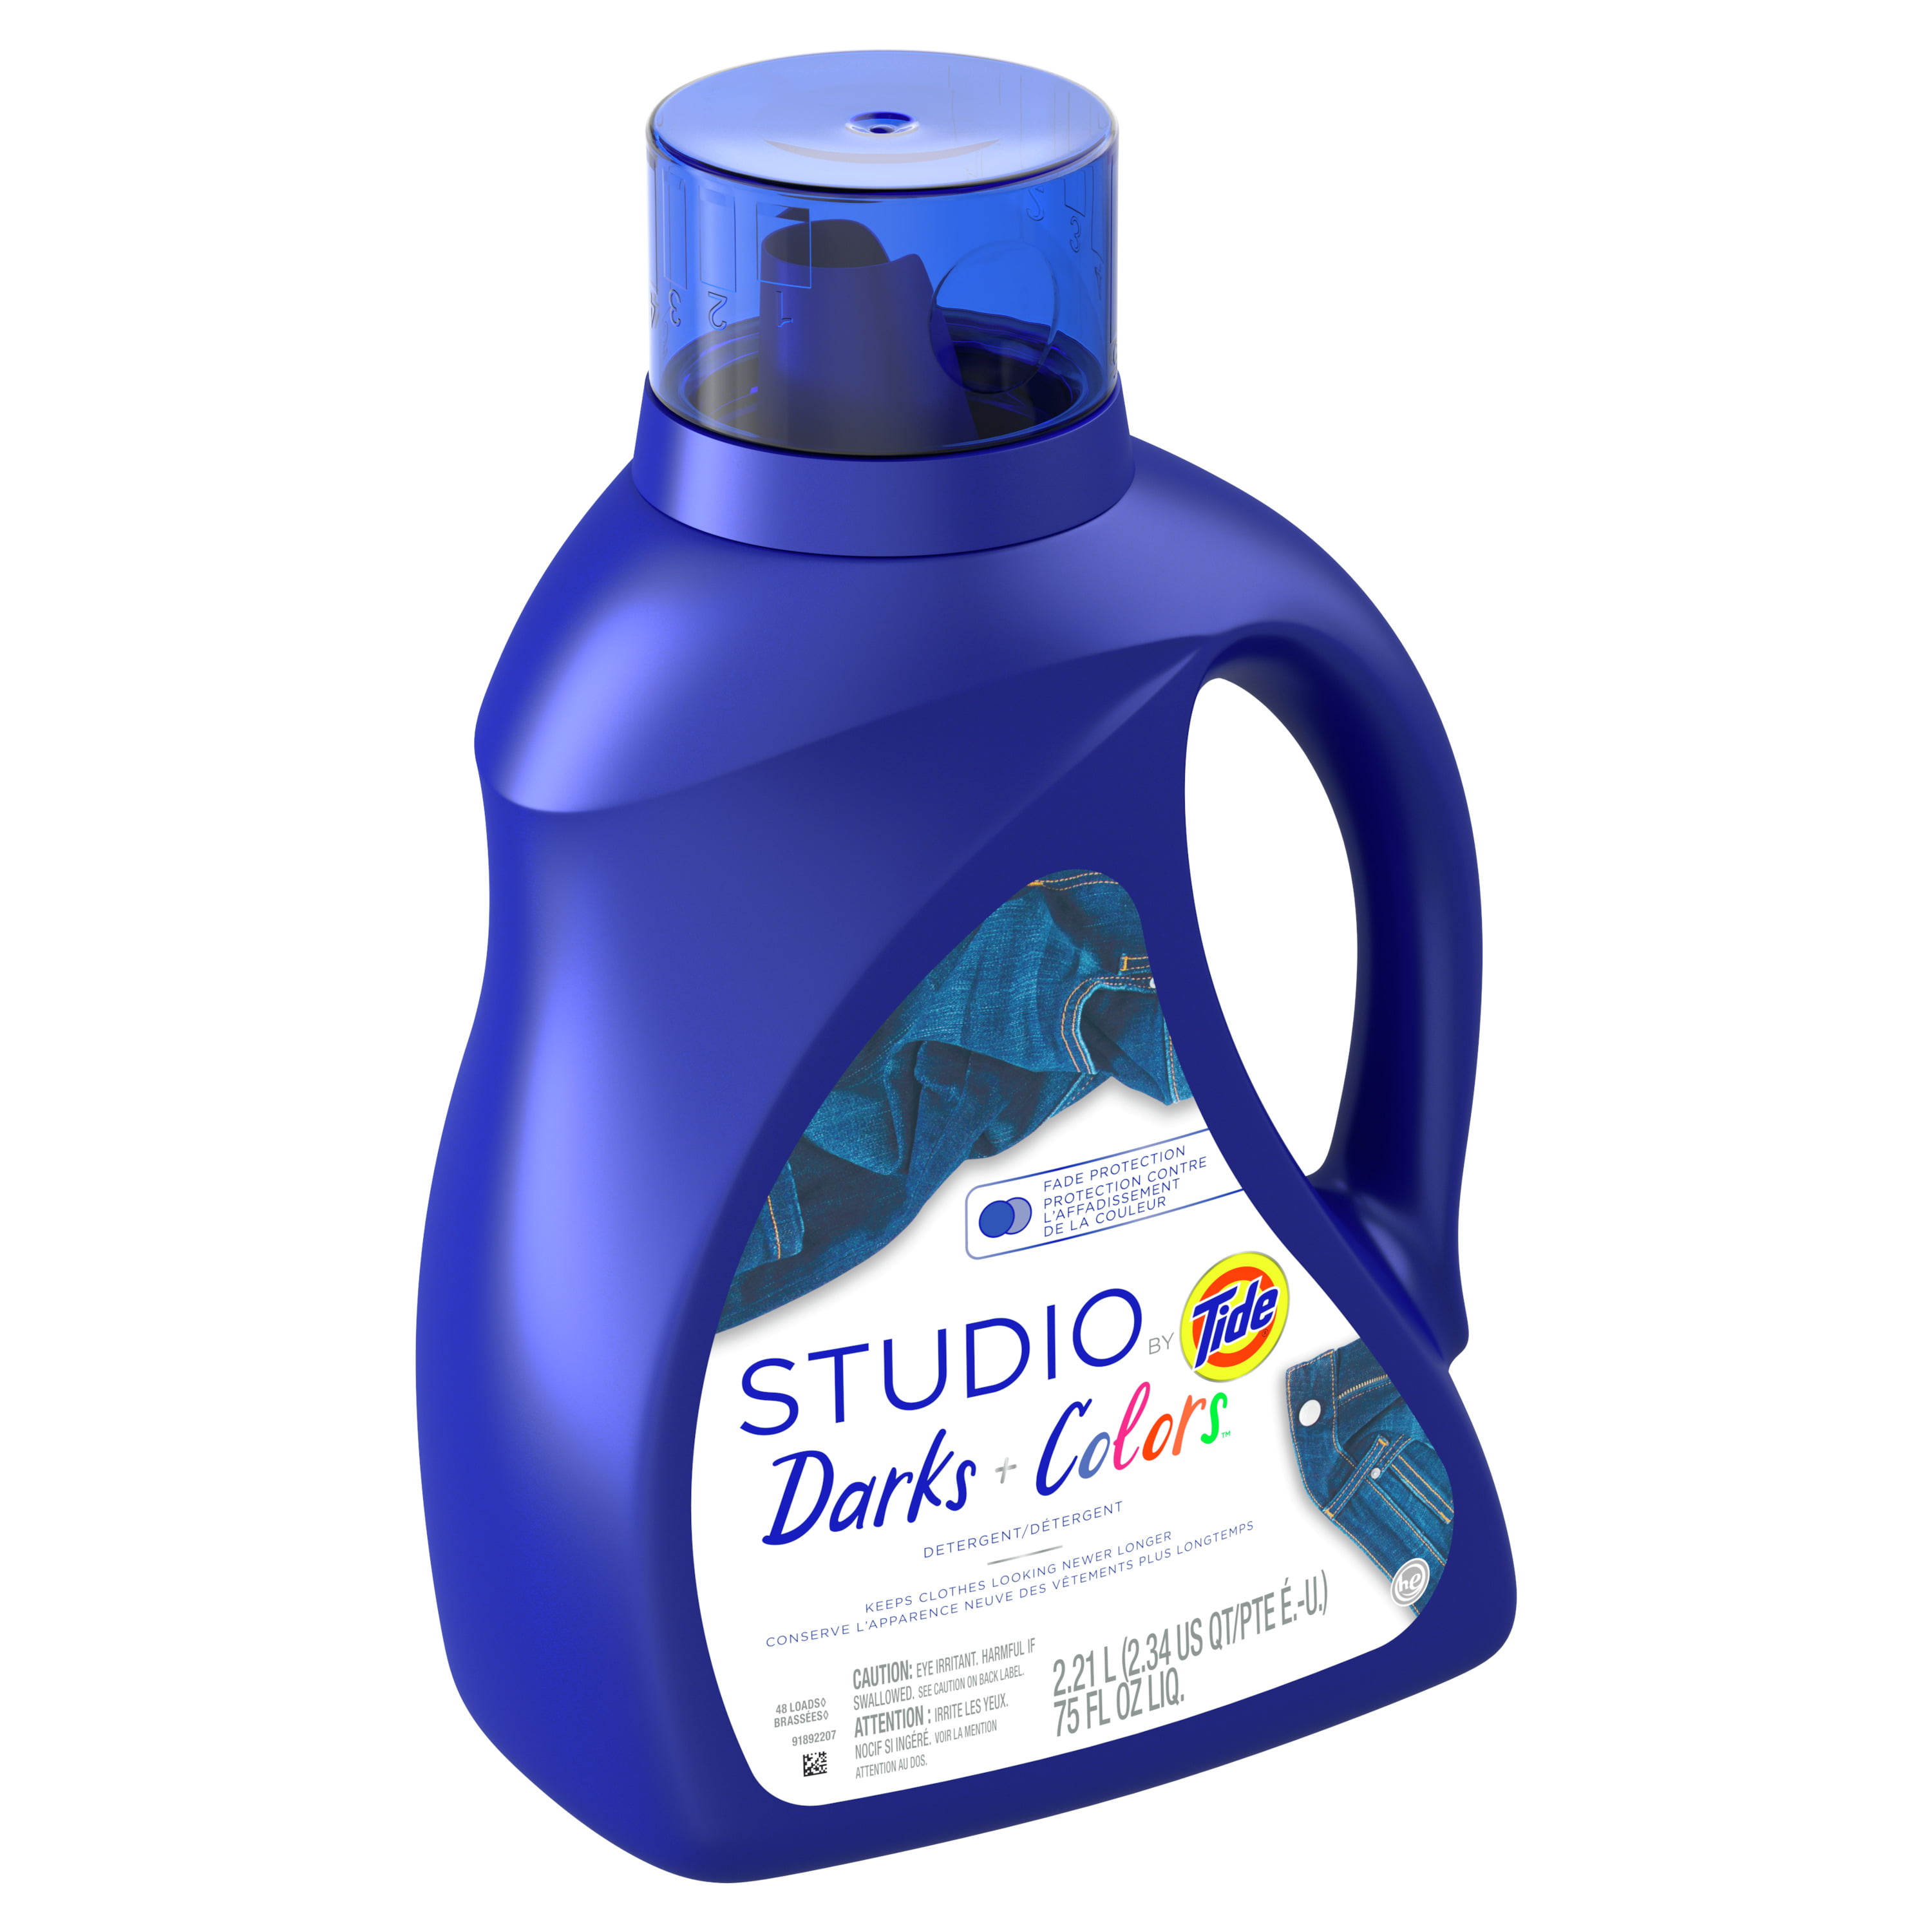 Studio by Tide Liquid Laundry Detergent, Darks & Colors, 75 fl oz 48 loads  